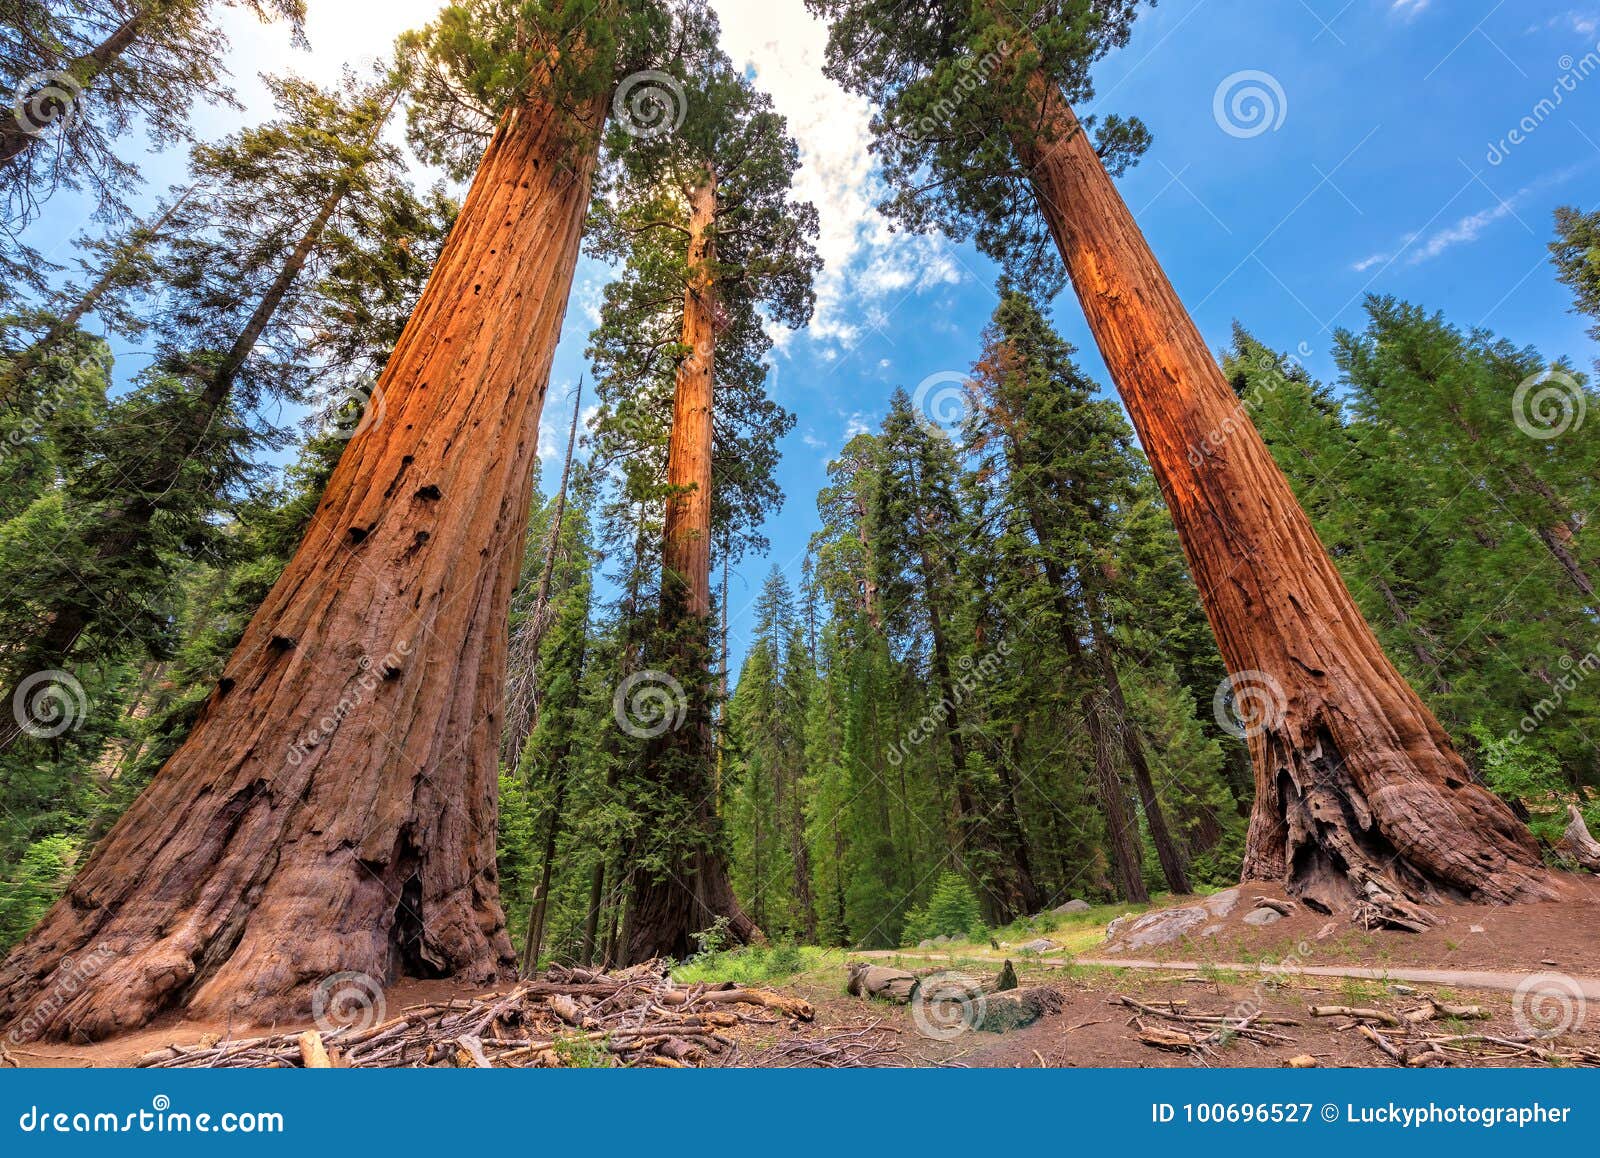 giant sequoias in sequoia national park